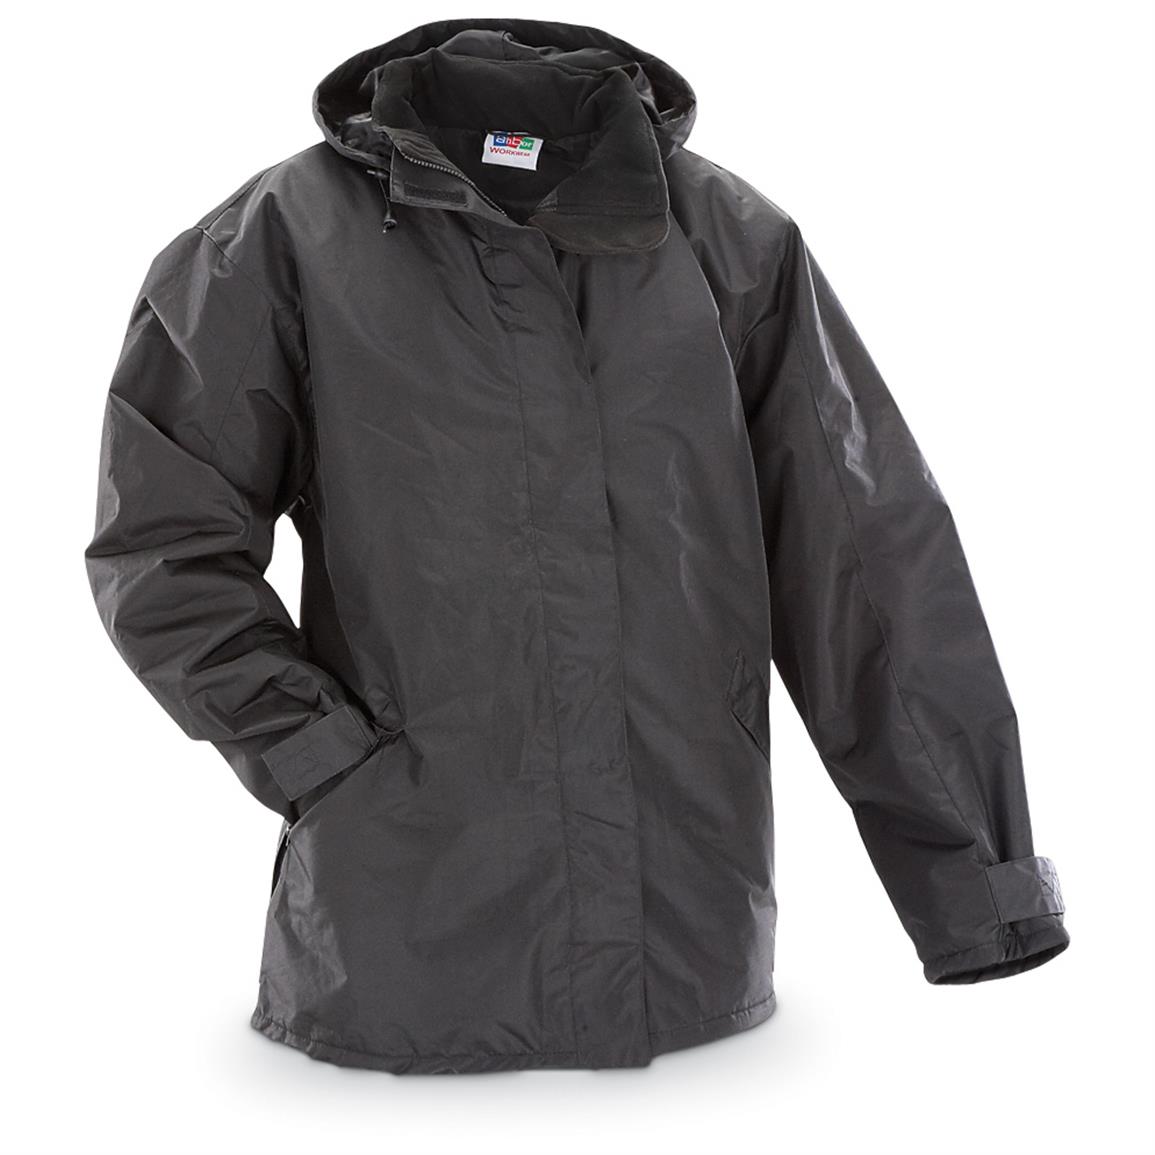 Anbor Waterproof Work Jacket - 621999, Insulated Jackets & Coats at ...